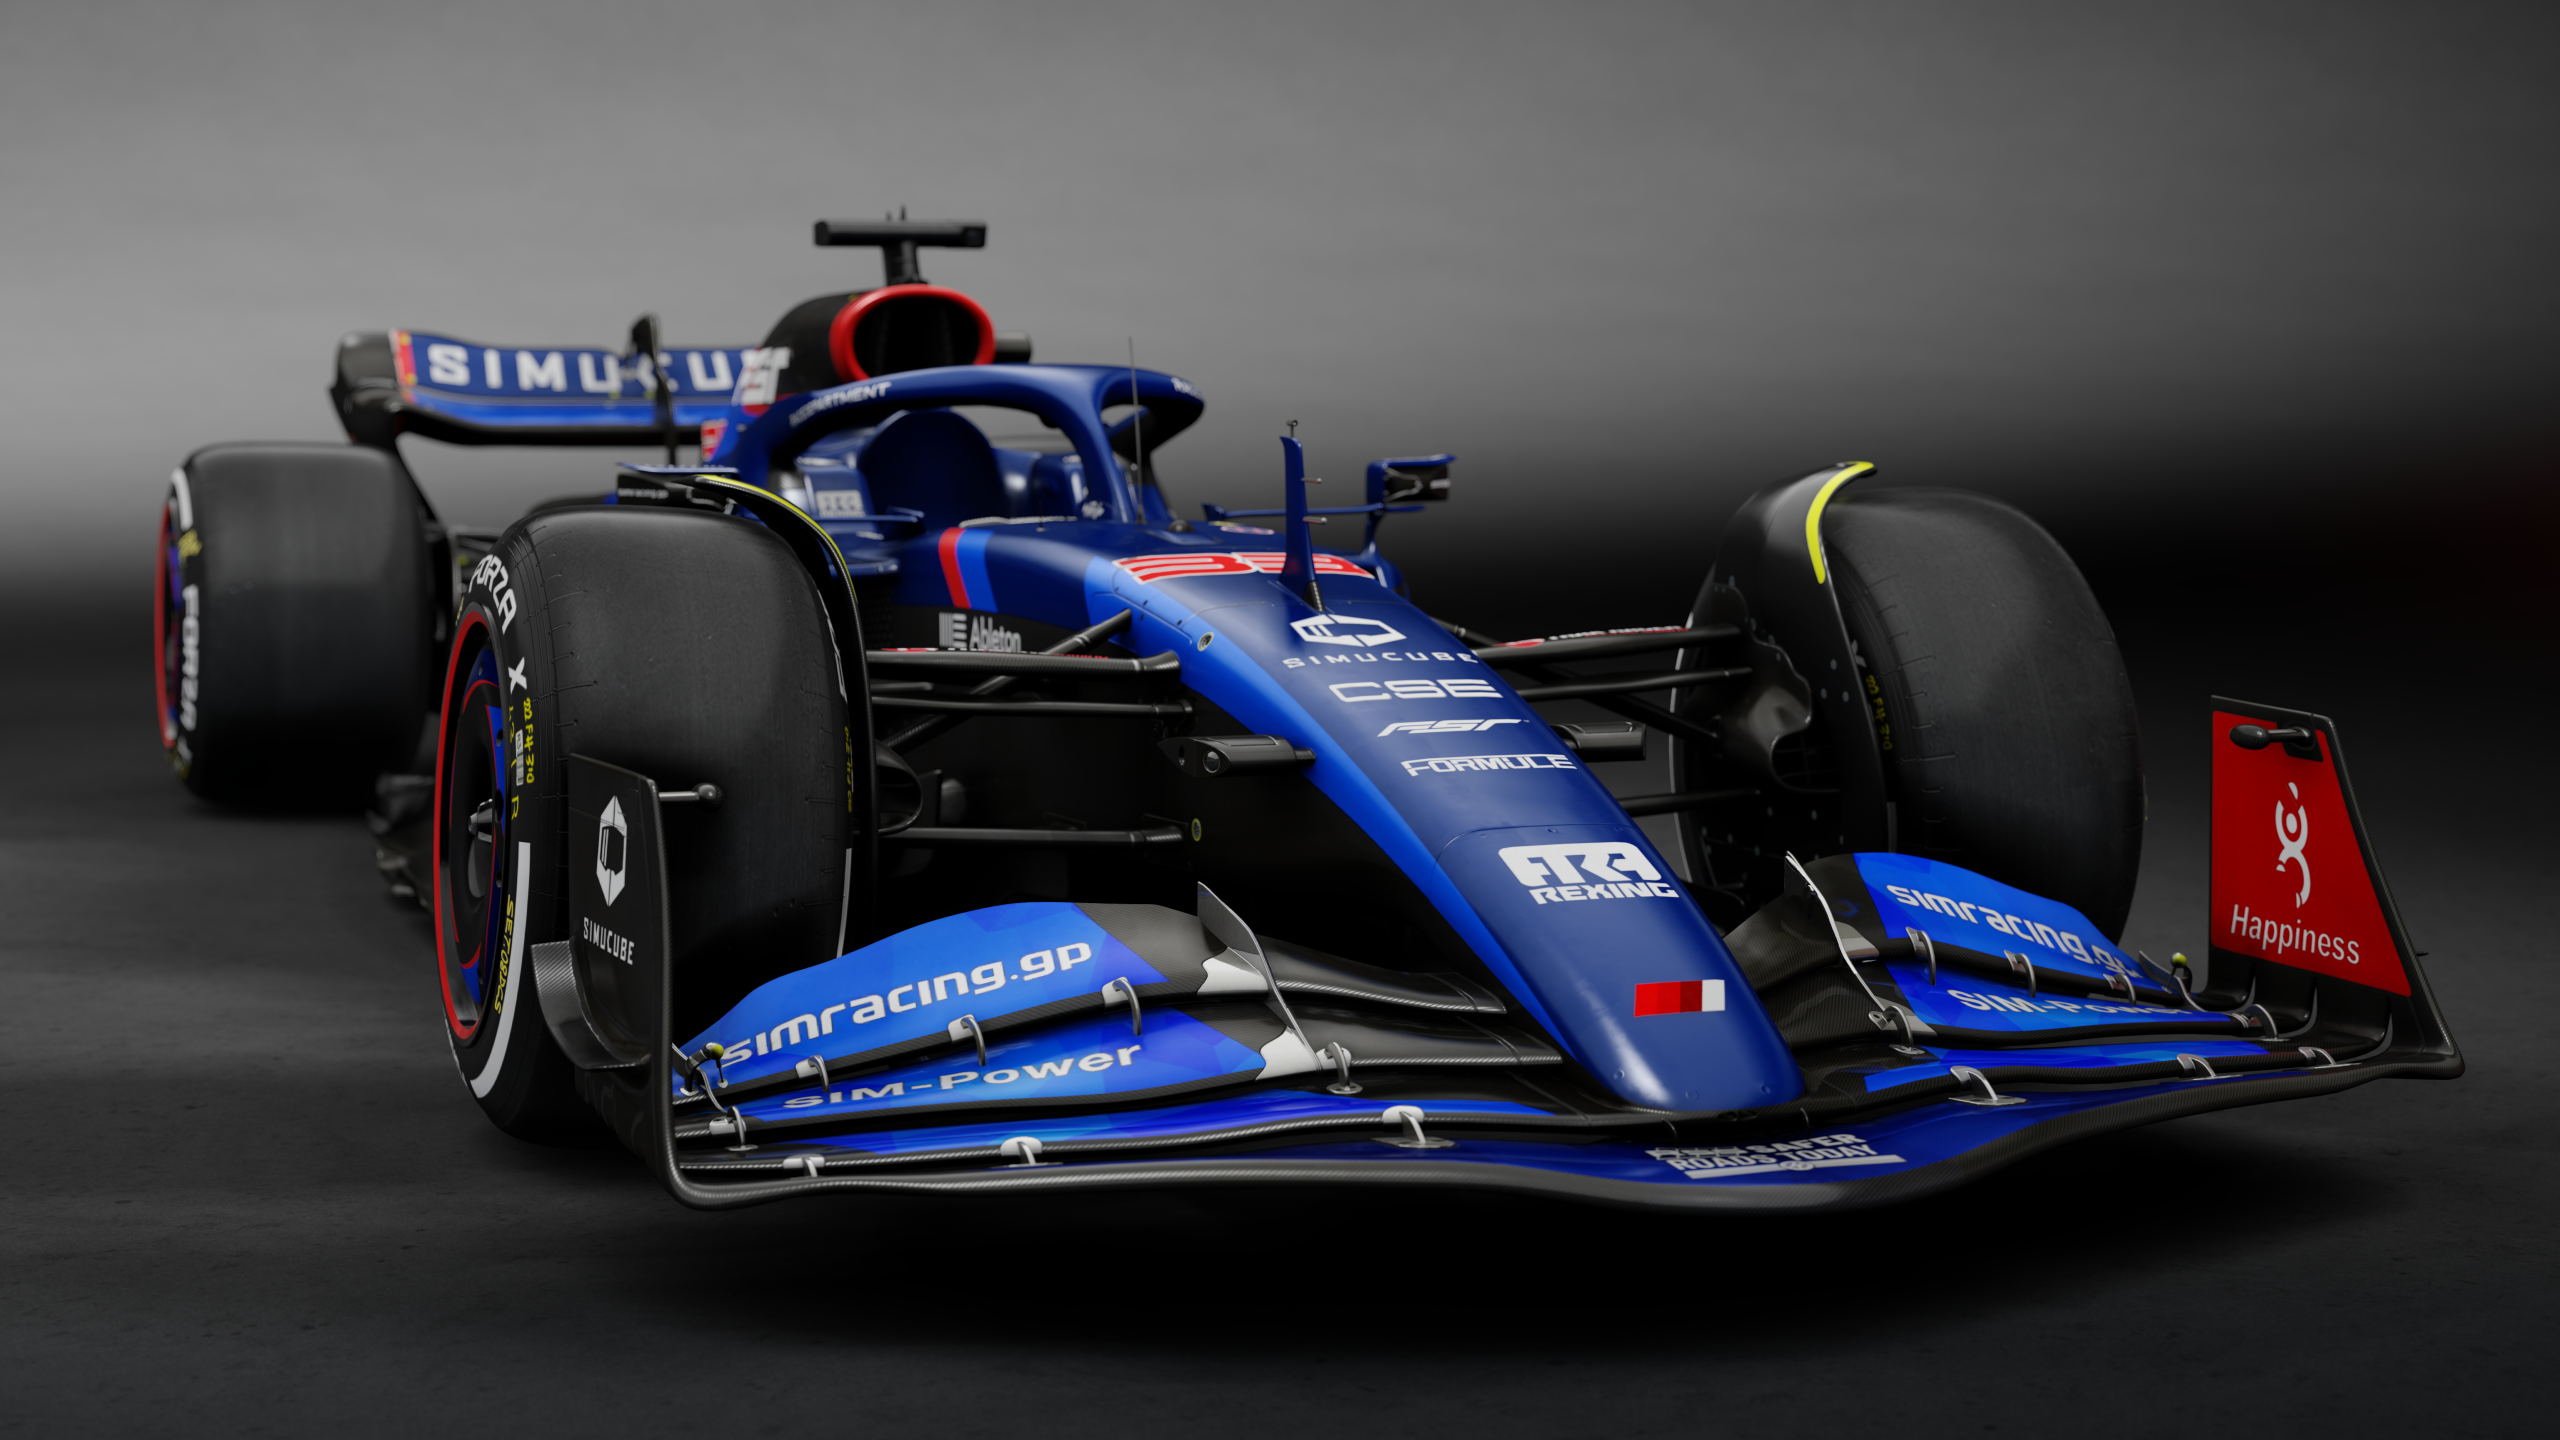 RSS 'NEW' Formula Hybrid 2022 - F1 2022 Full Season 'Custom Championship